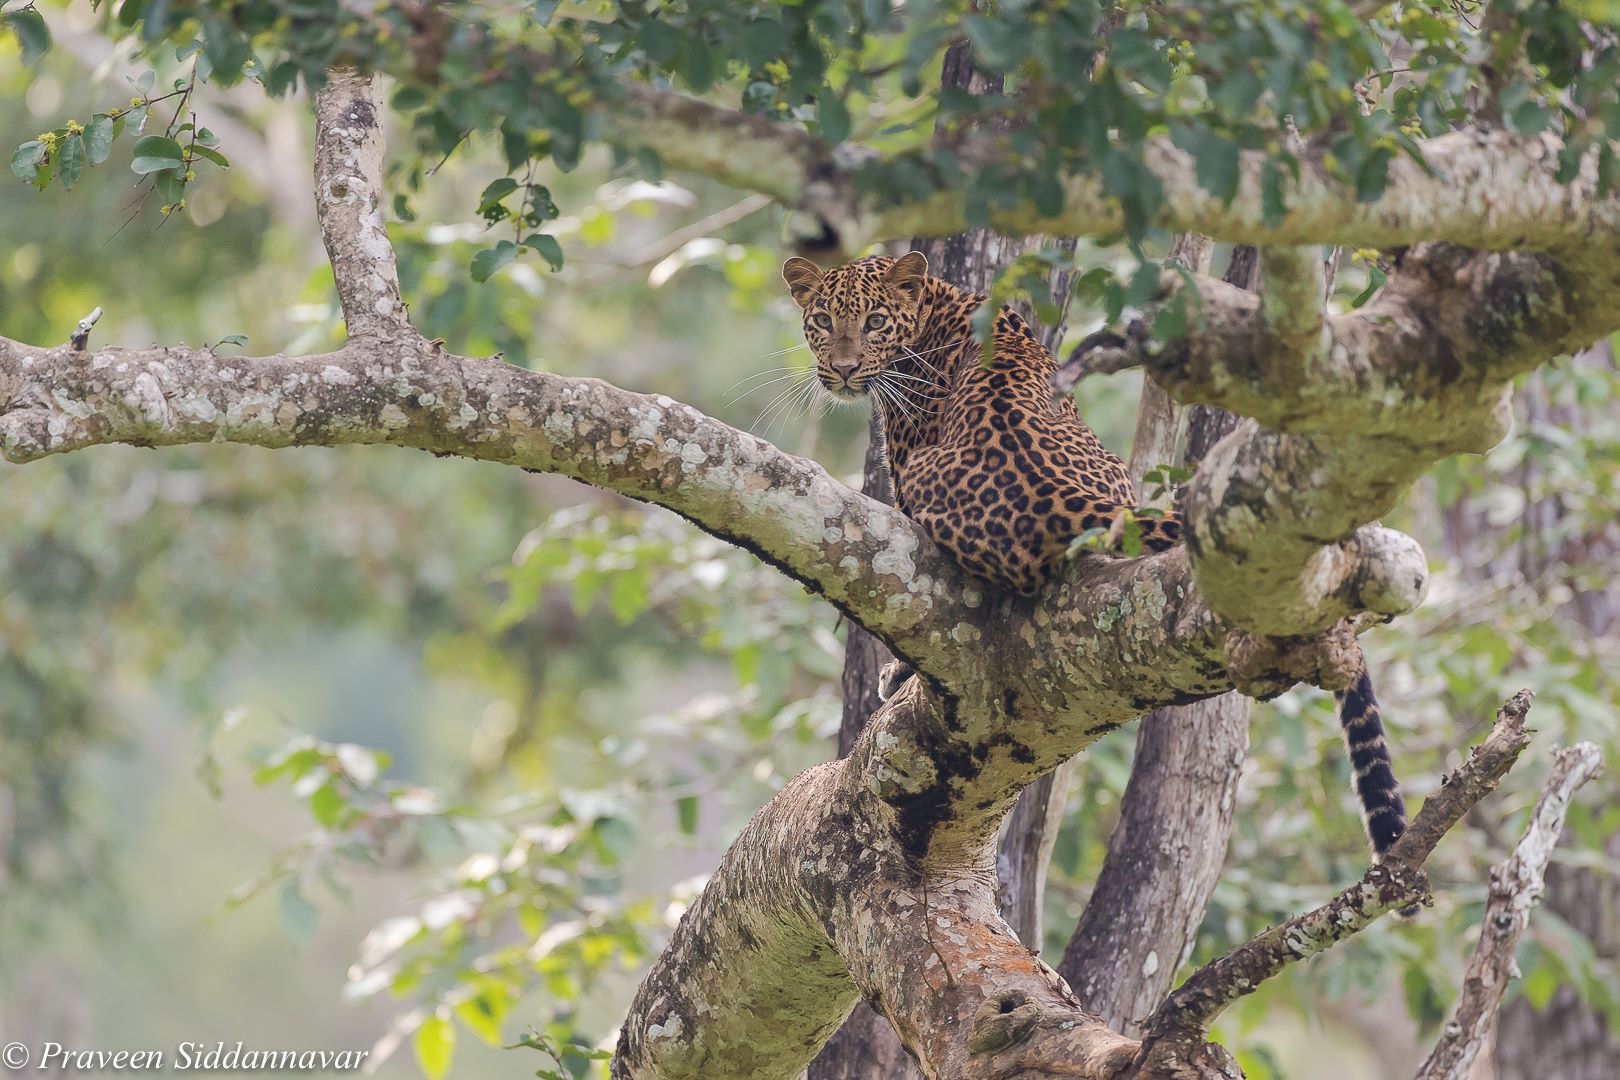 Leopard from Kabini, Karnataka captured by Praveen Siddannavar